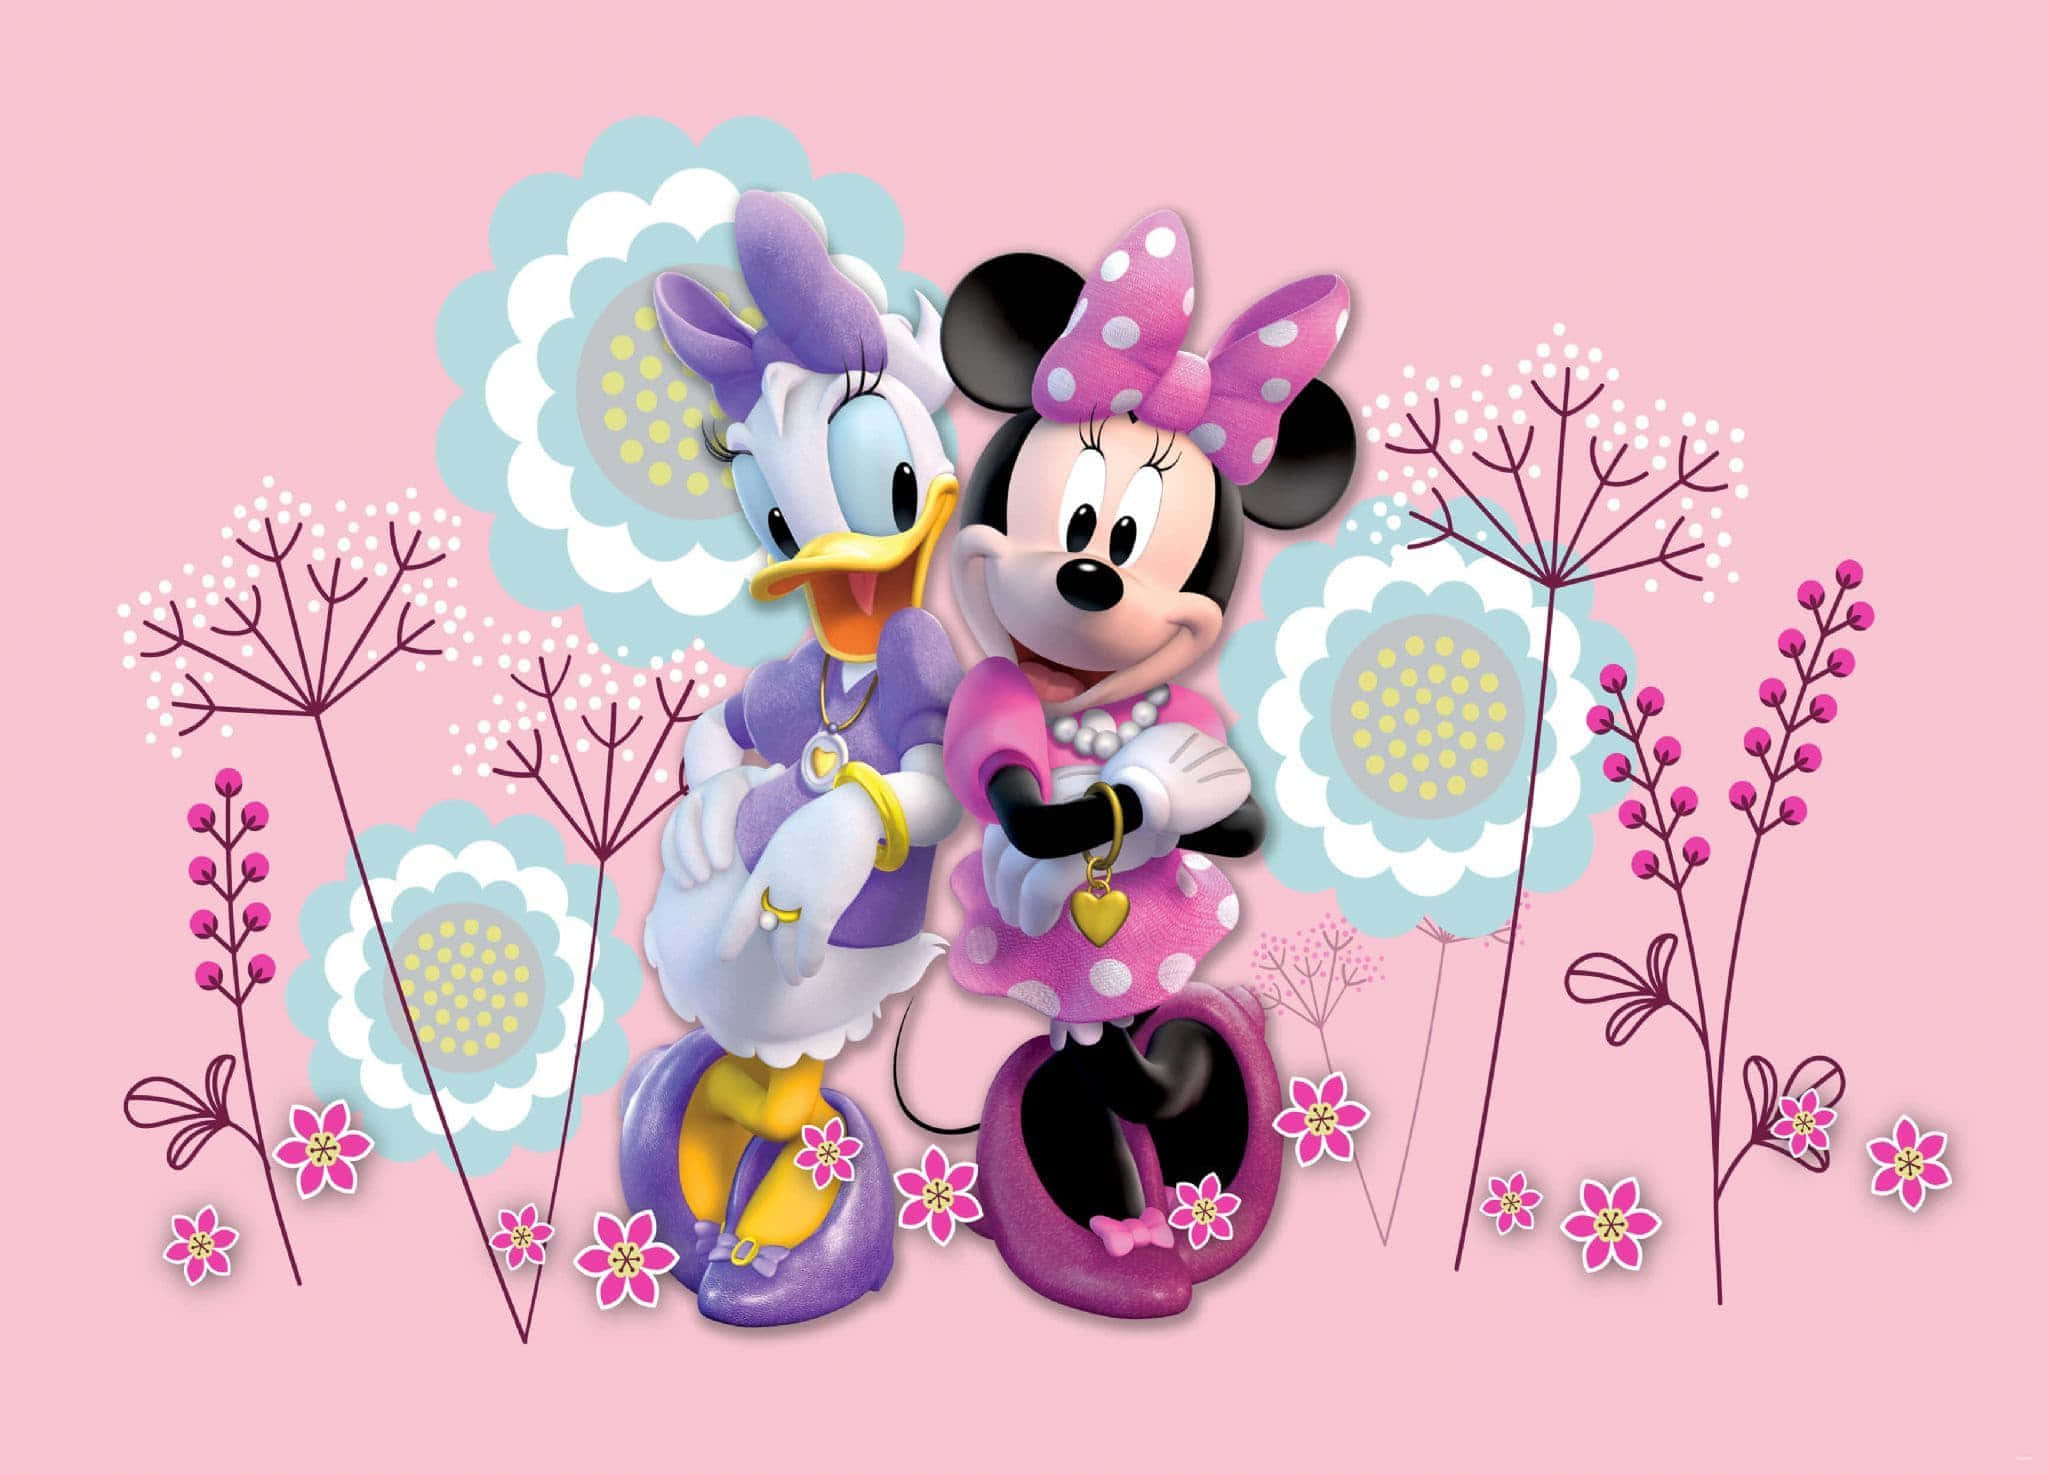 Classic Disney Princess Minnie Mouse